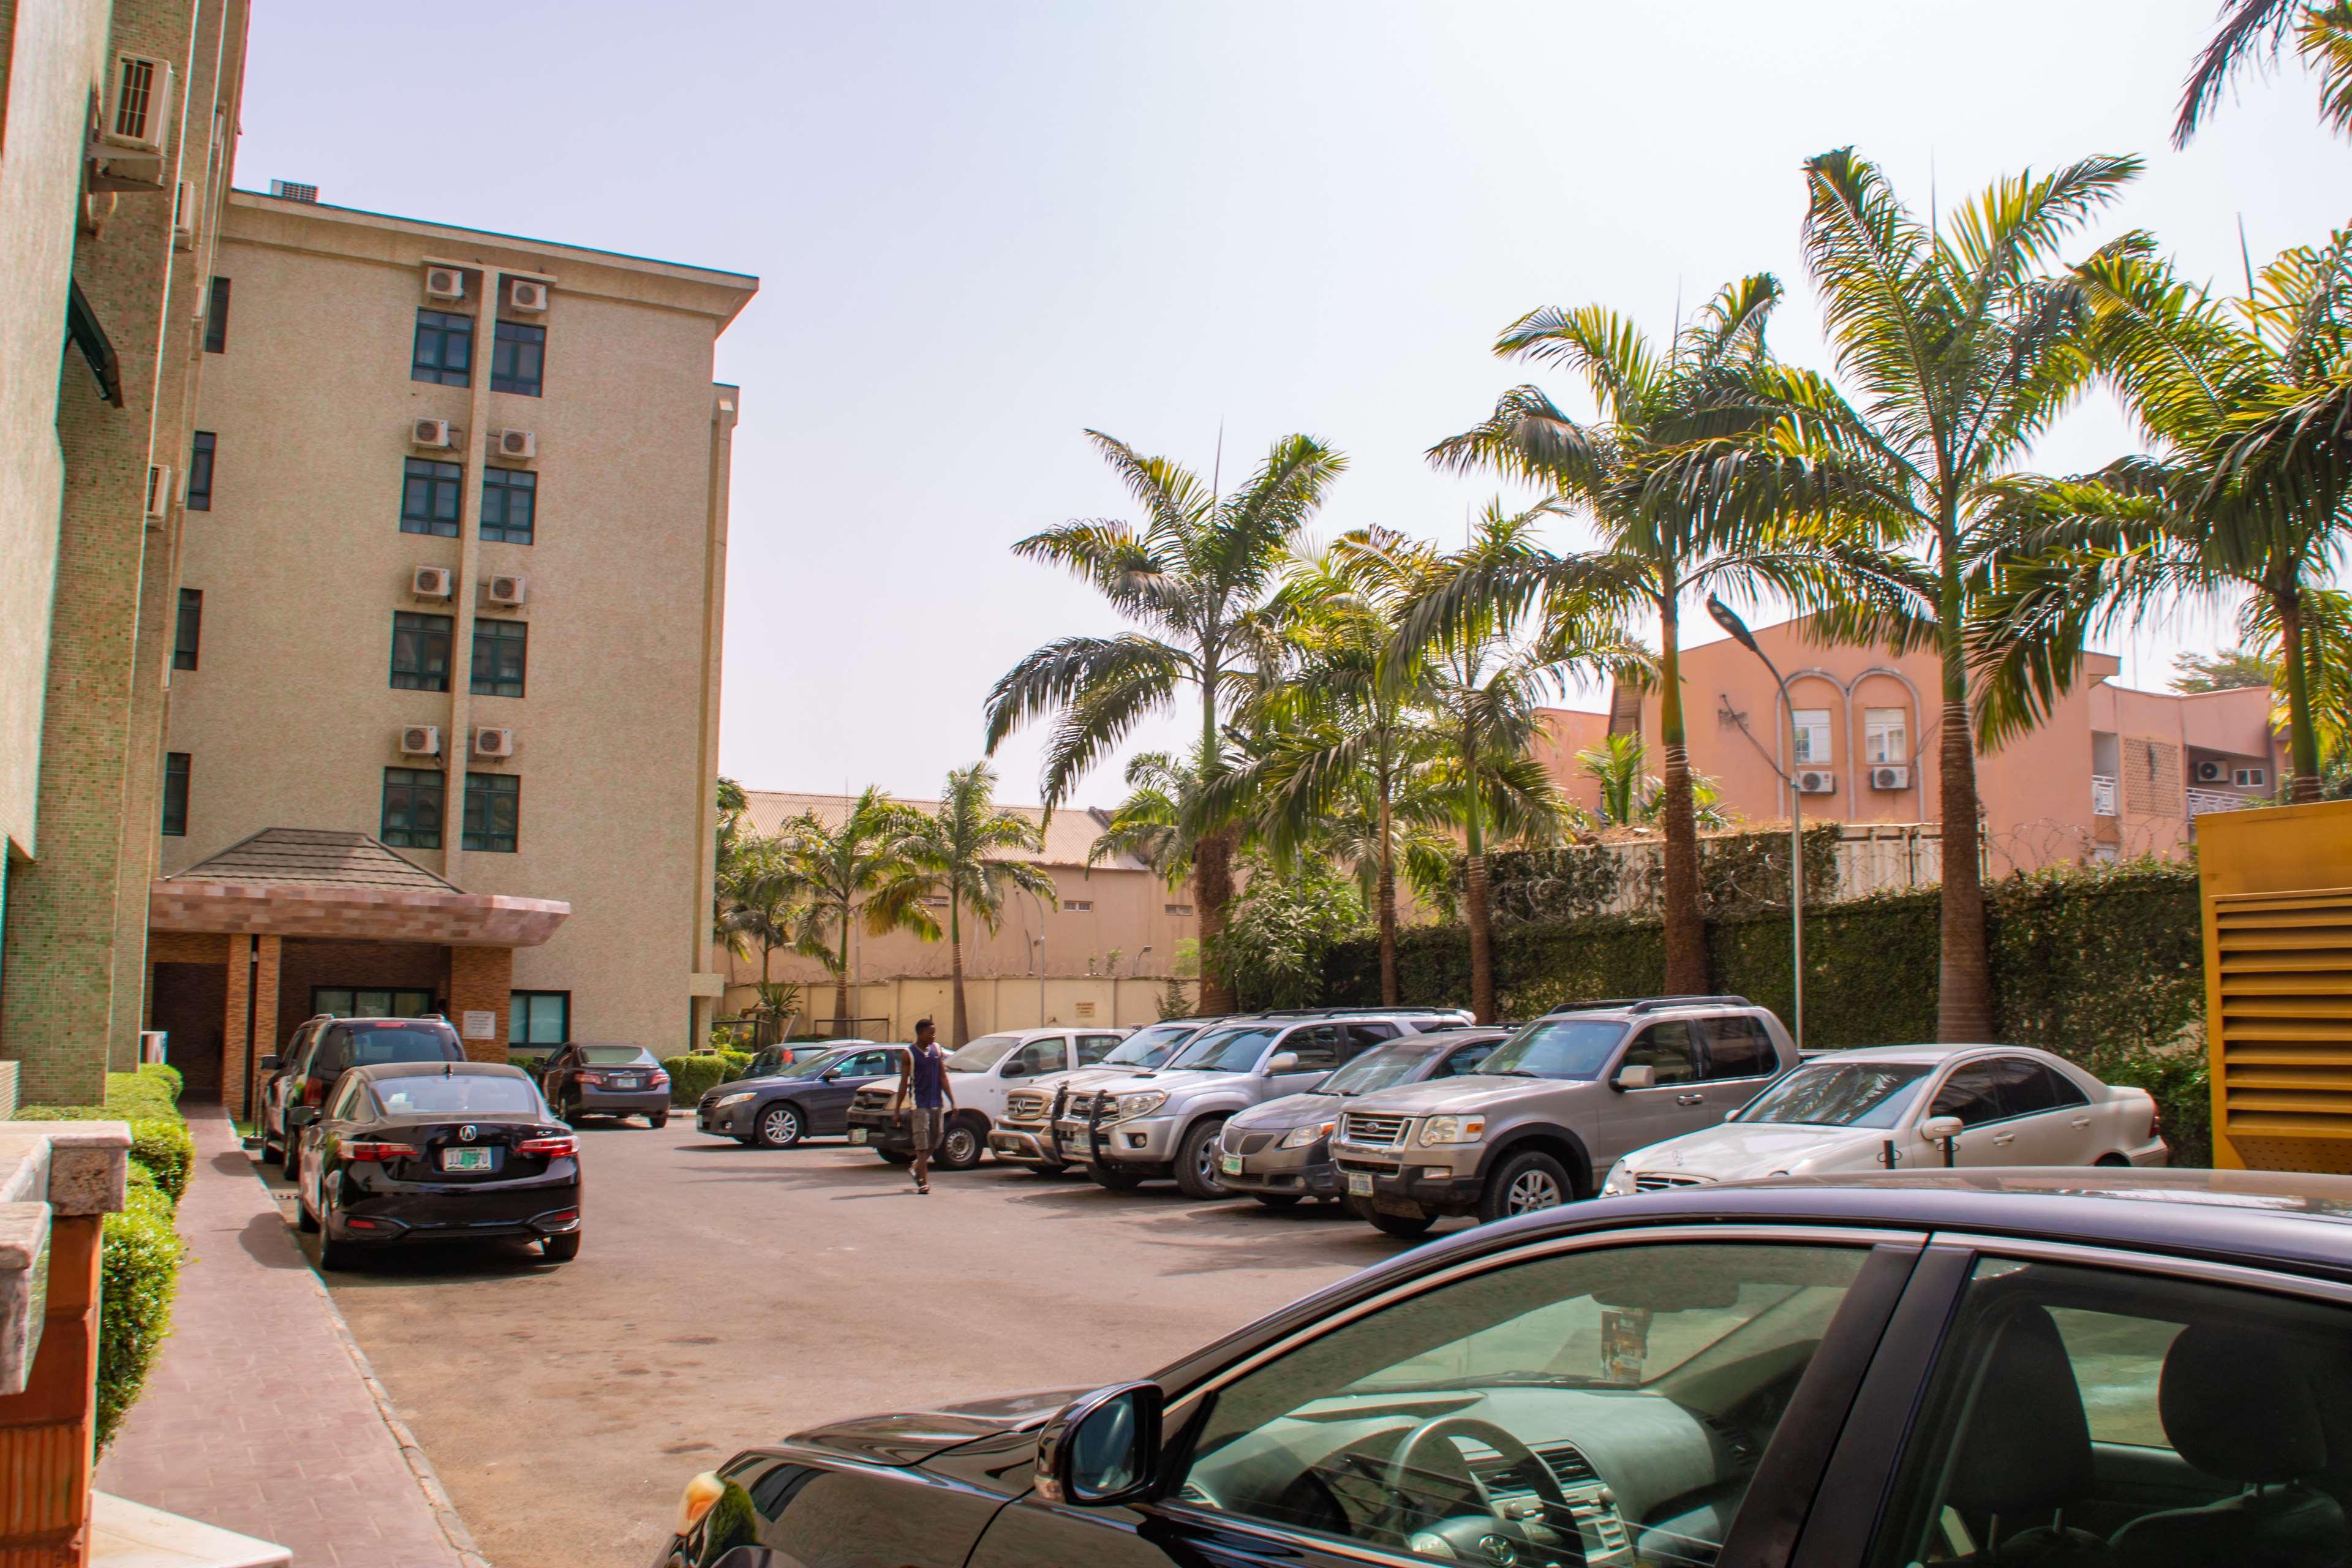 Denis Hotels in Abuja, Nigeria